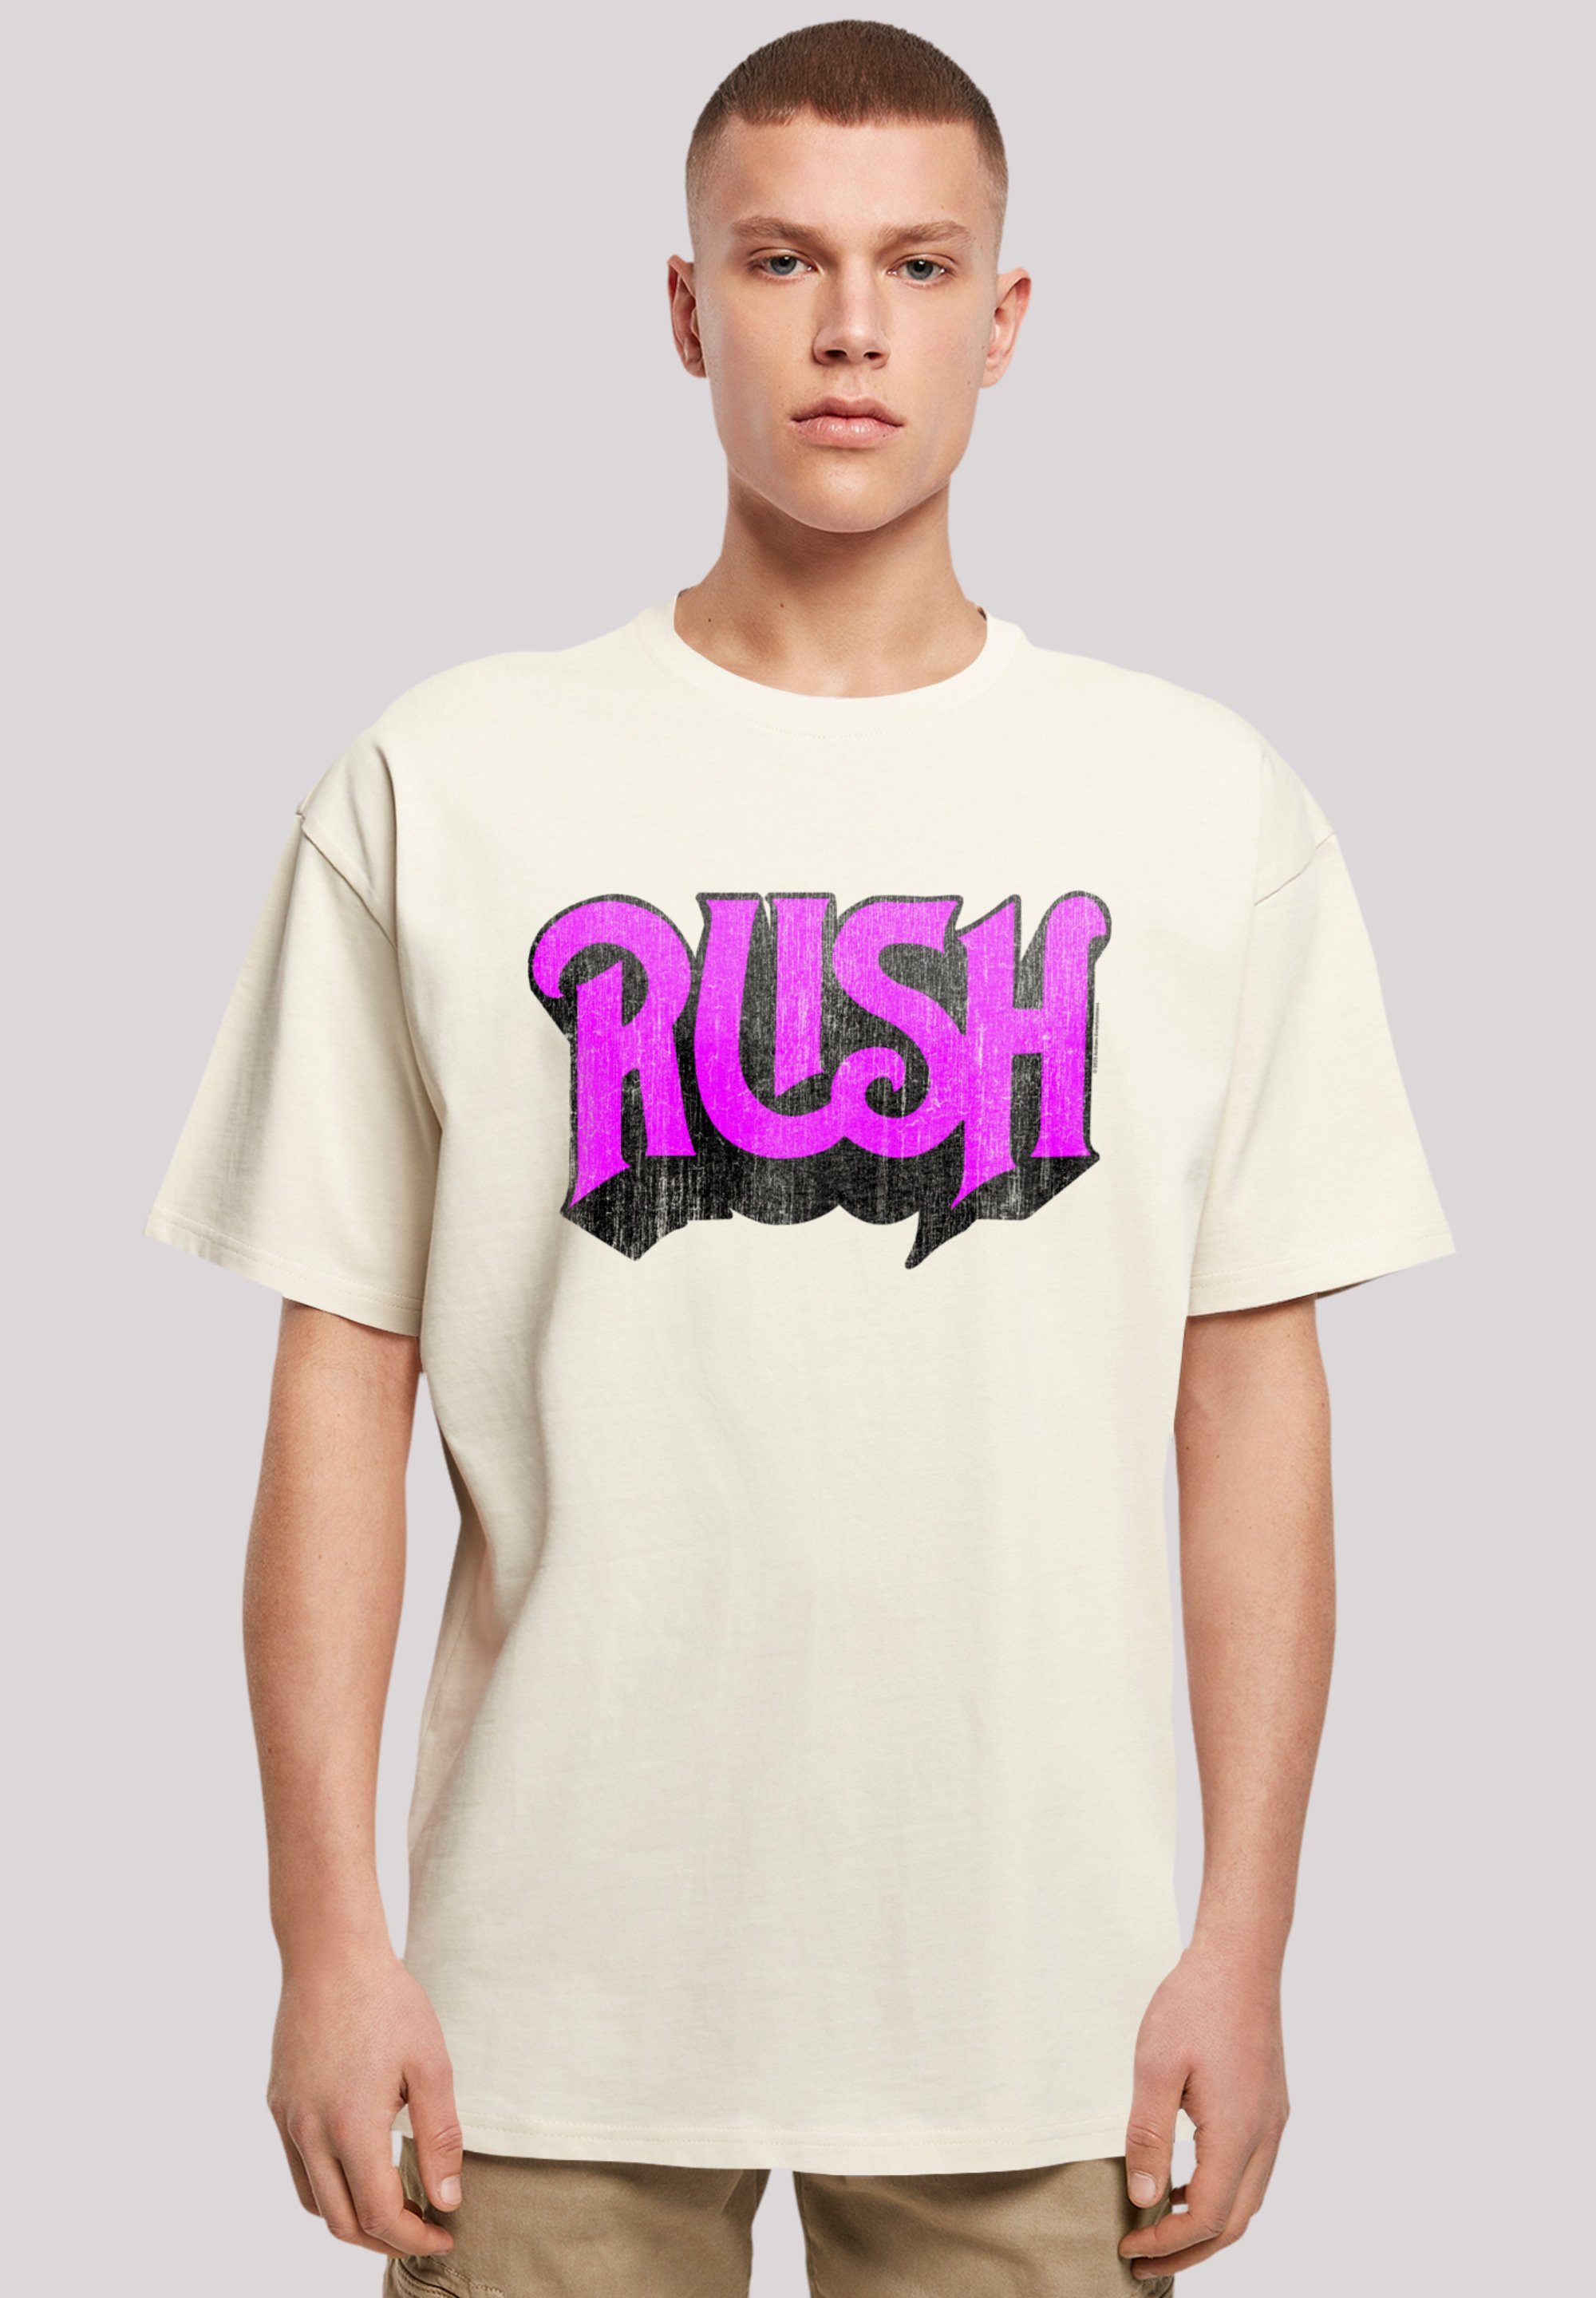 F4NT4STIC T-Shirt Rush Rock Band Distressed Logo Premium Qualität sand